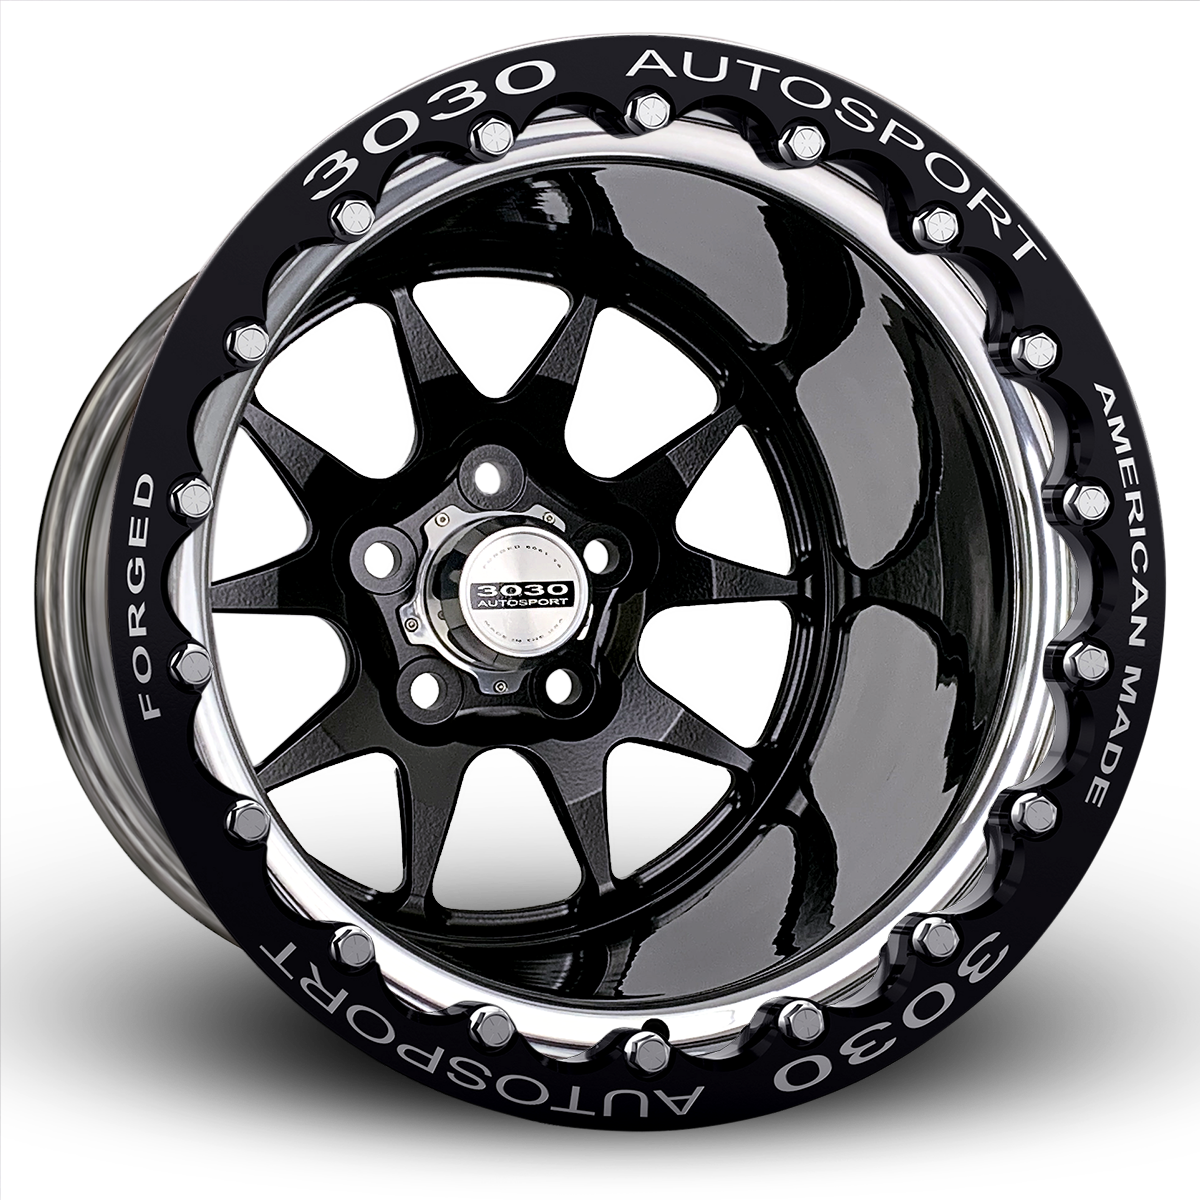 MACH-10 Double-Beadlock Wheel, Size: 15x9", Bolt Pattern: 5x4.75", Backspace: 6" [Black/Polished]